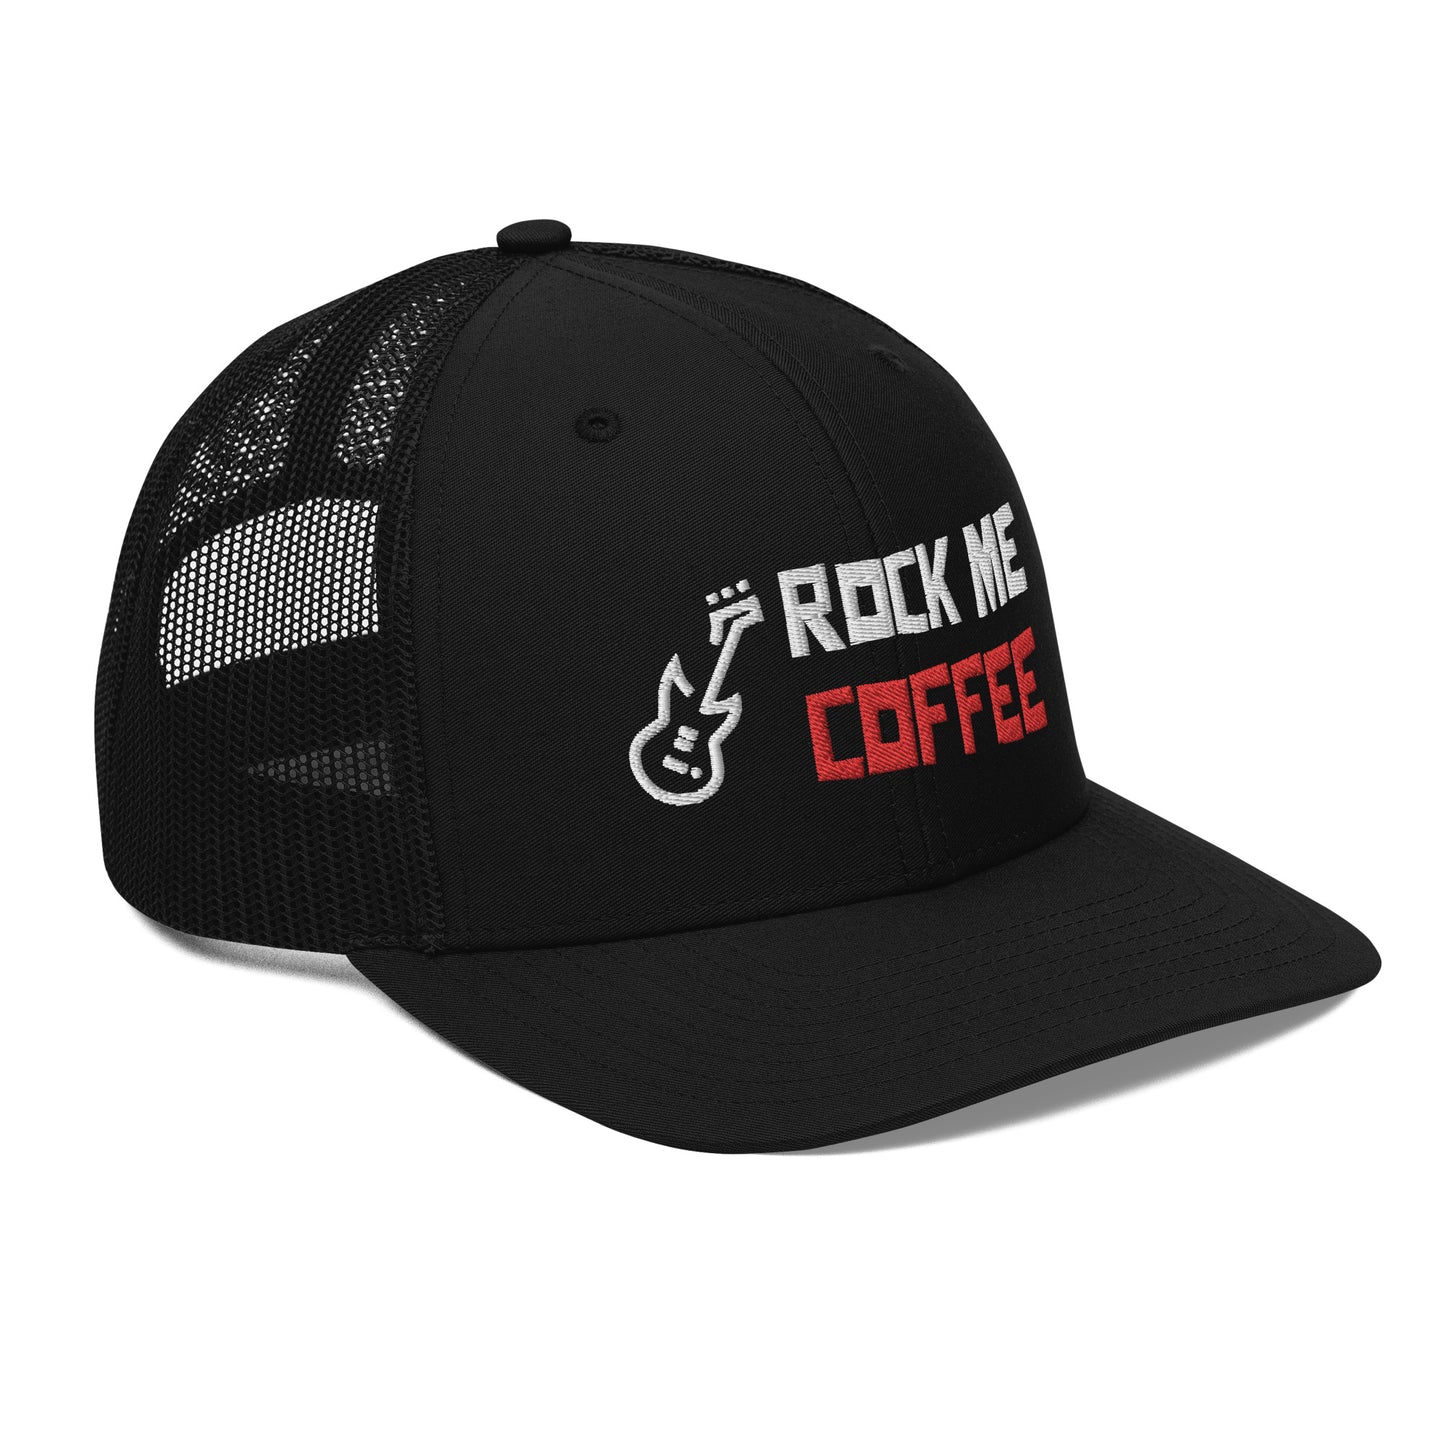 ROCK ME COFFEE/GUITAR - Trucker Cap